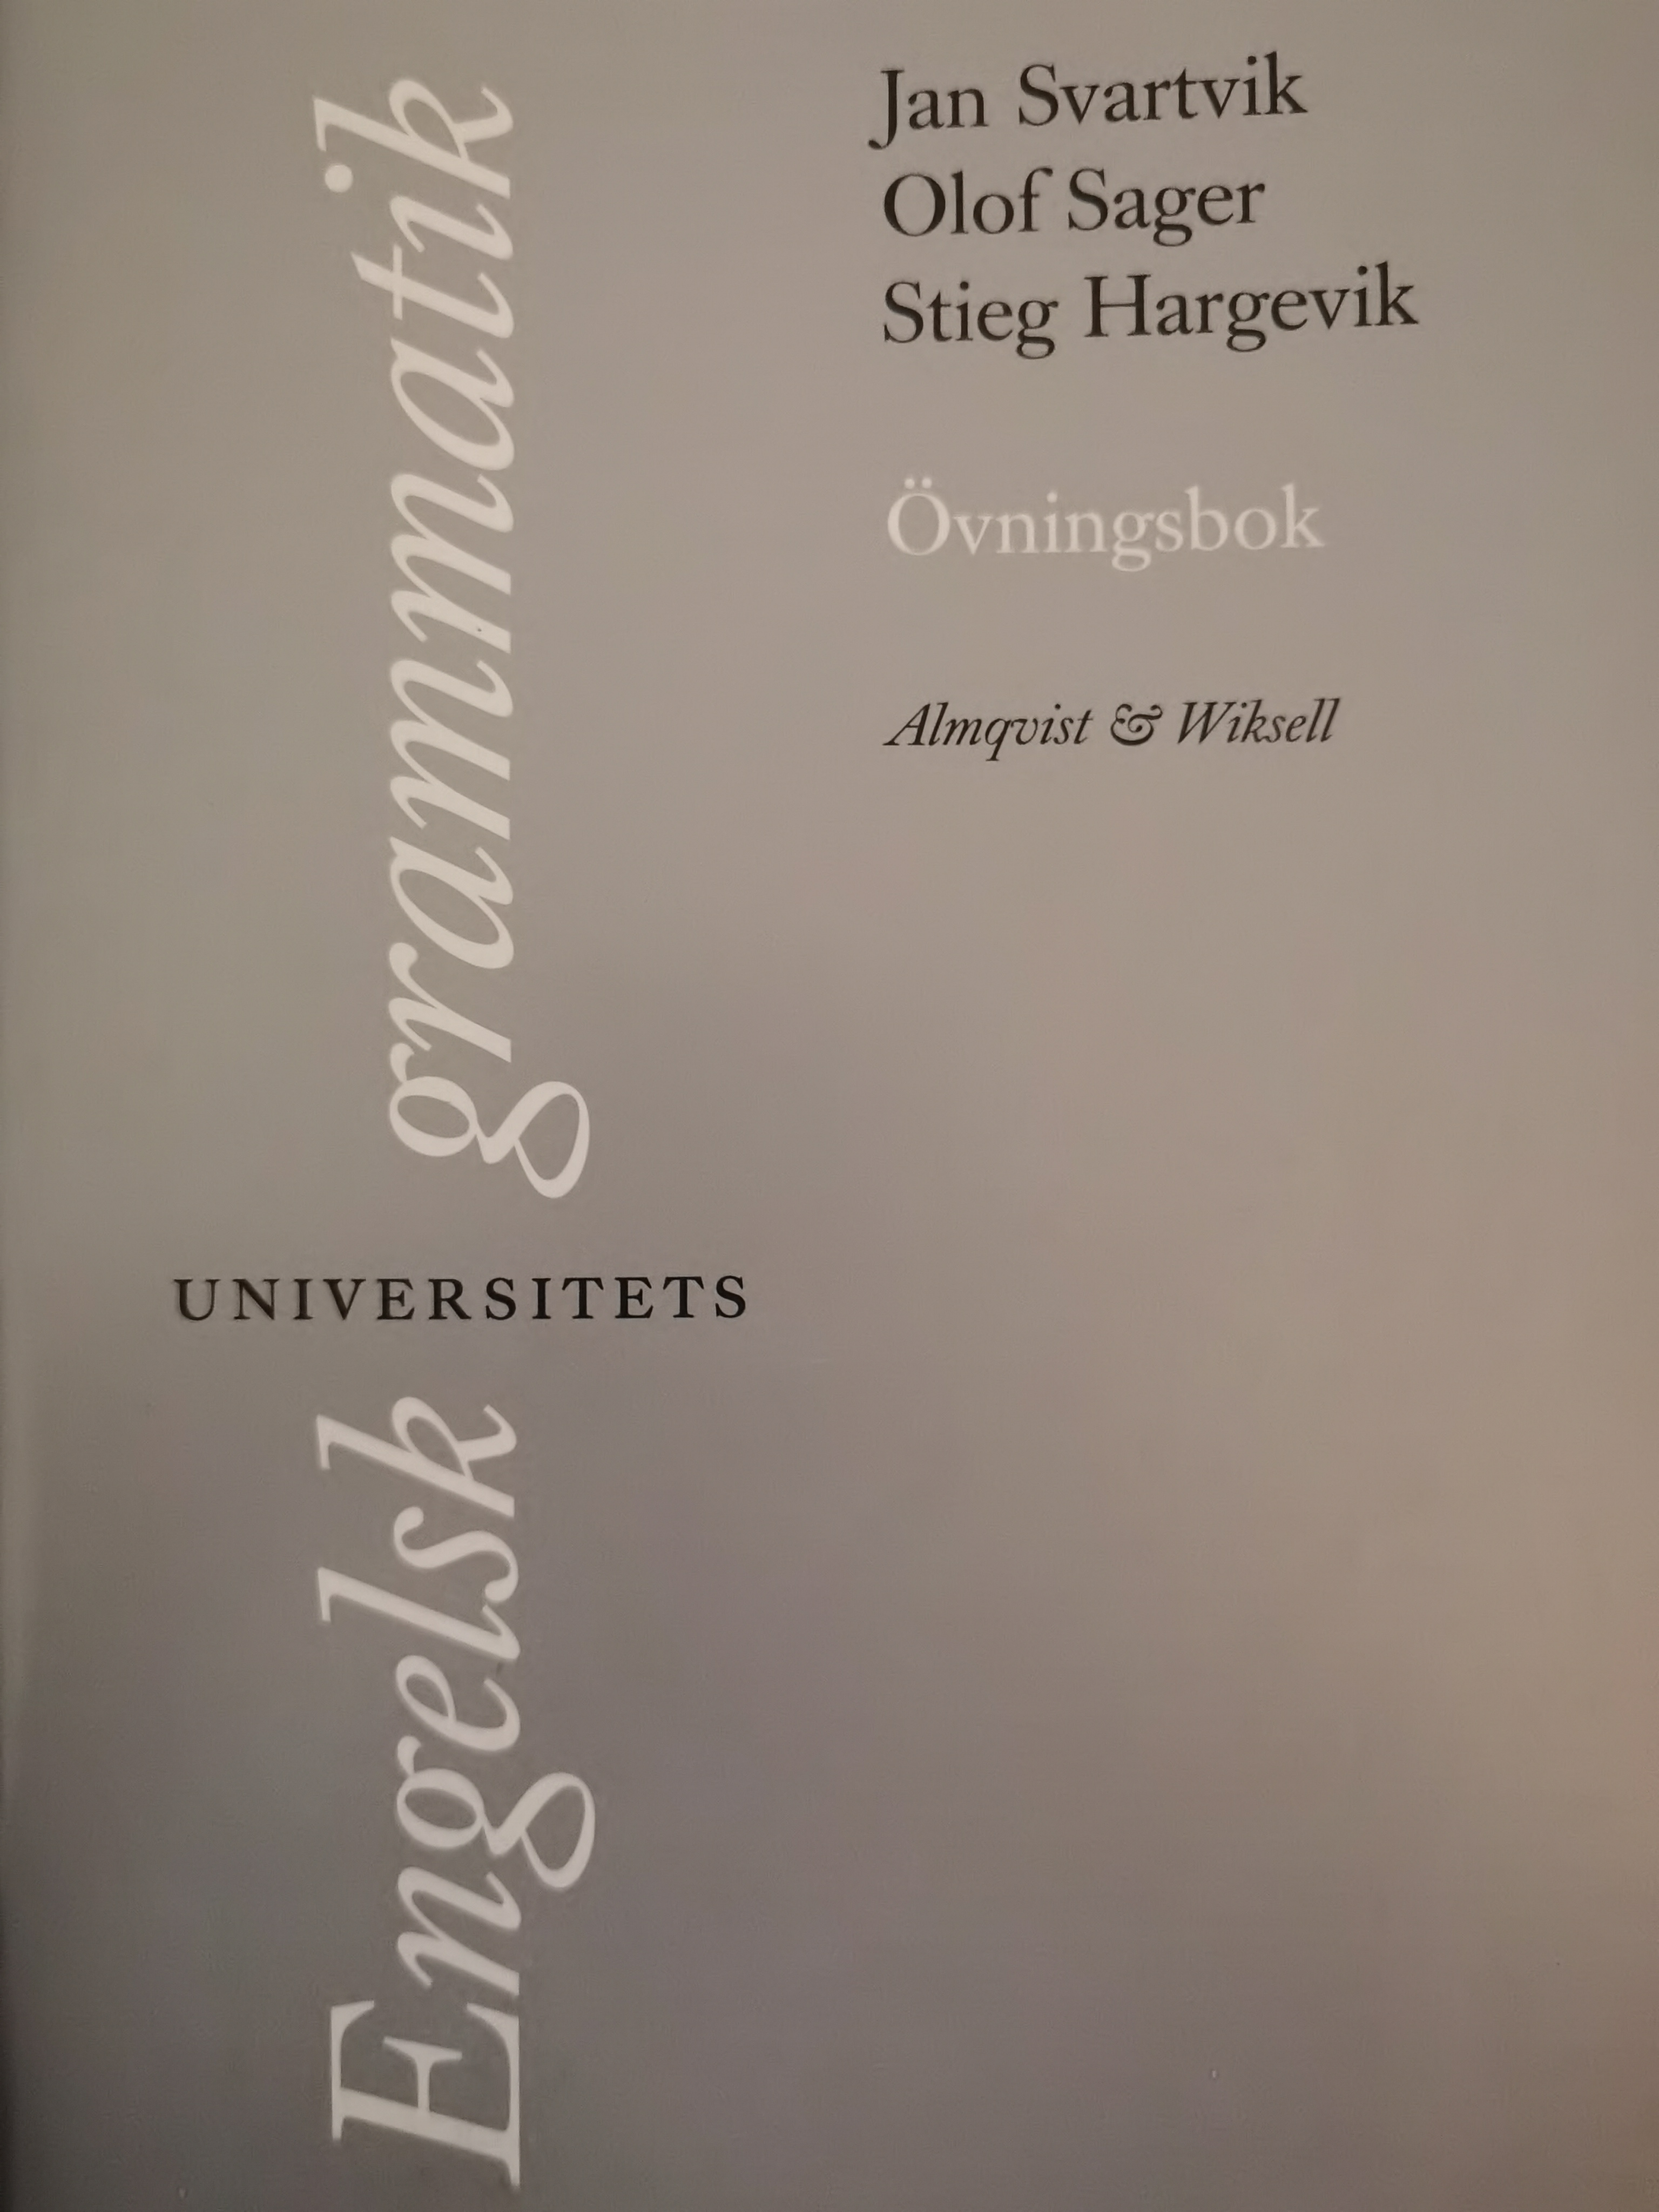 Engelsk universitetsgrammatik Övningsbok + Facit; Jan Svartvik, Olof Sager, Stieg Hargevik; 1997